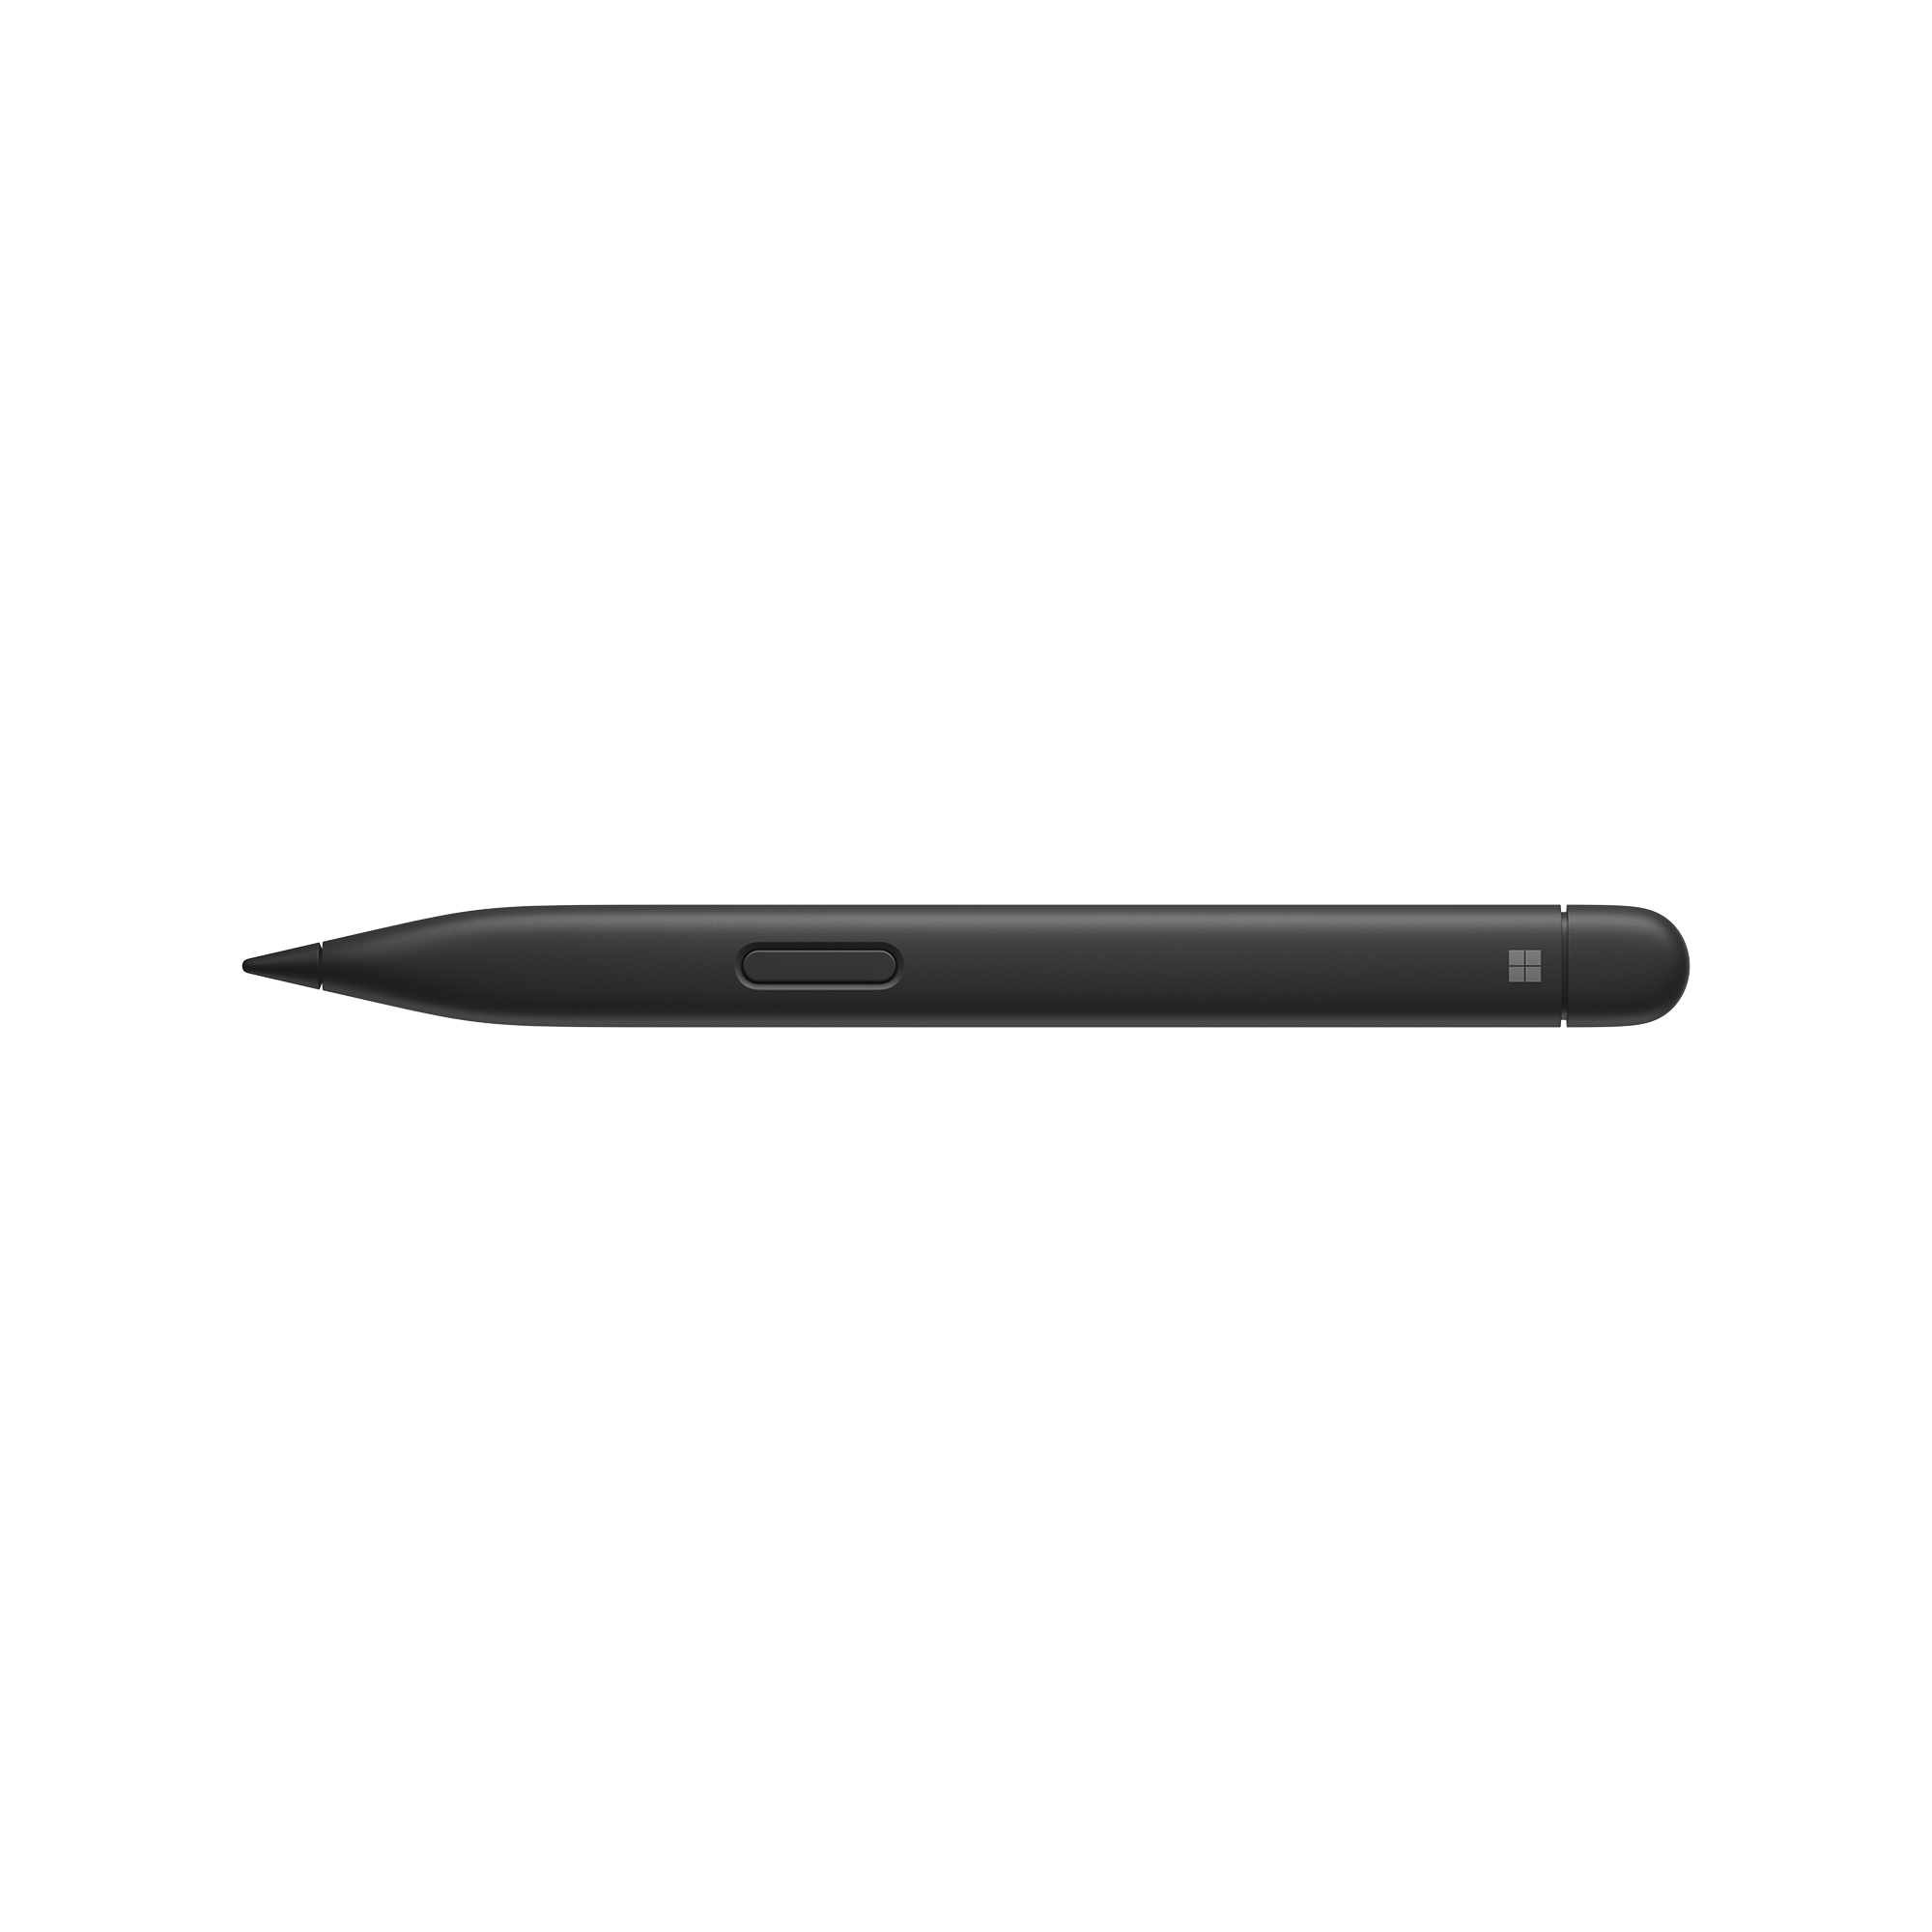 Surface Pen 8X6-00001 Microsoft Signature Pro Slim - Black Keyboard 2 with